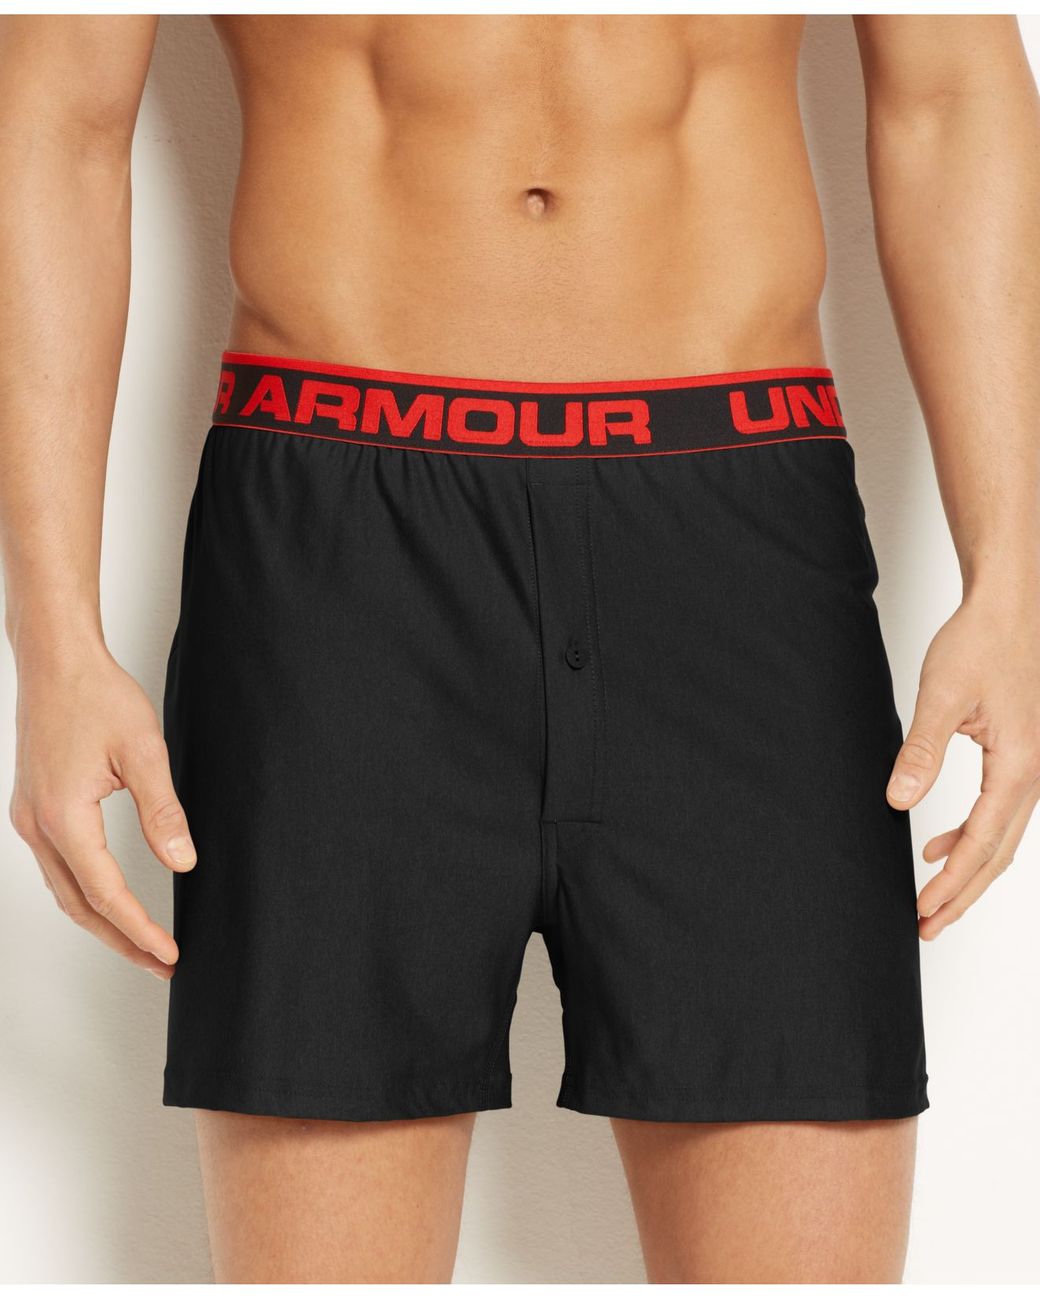 Under Armour Original Knit Boxer Loose Fit in Black for Men